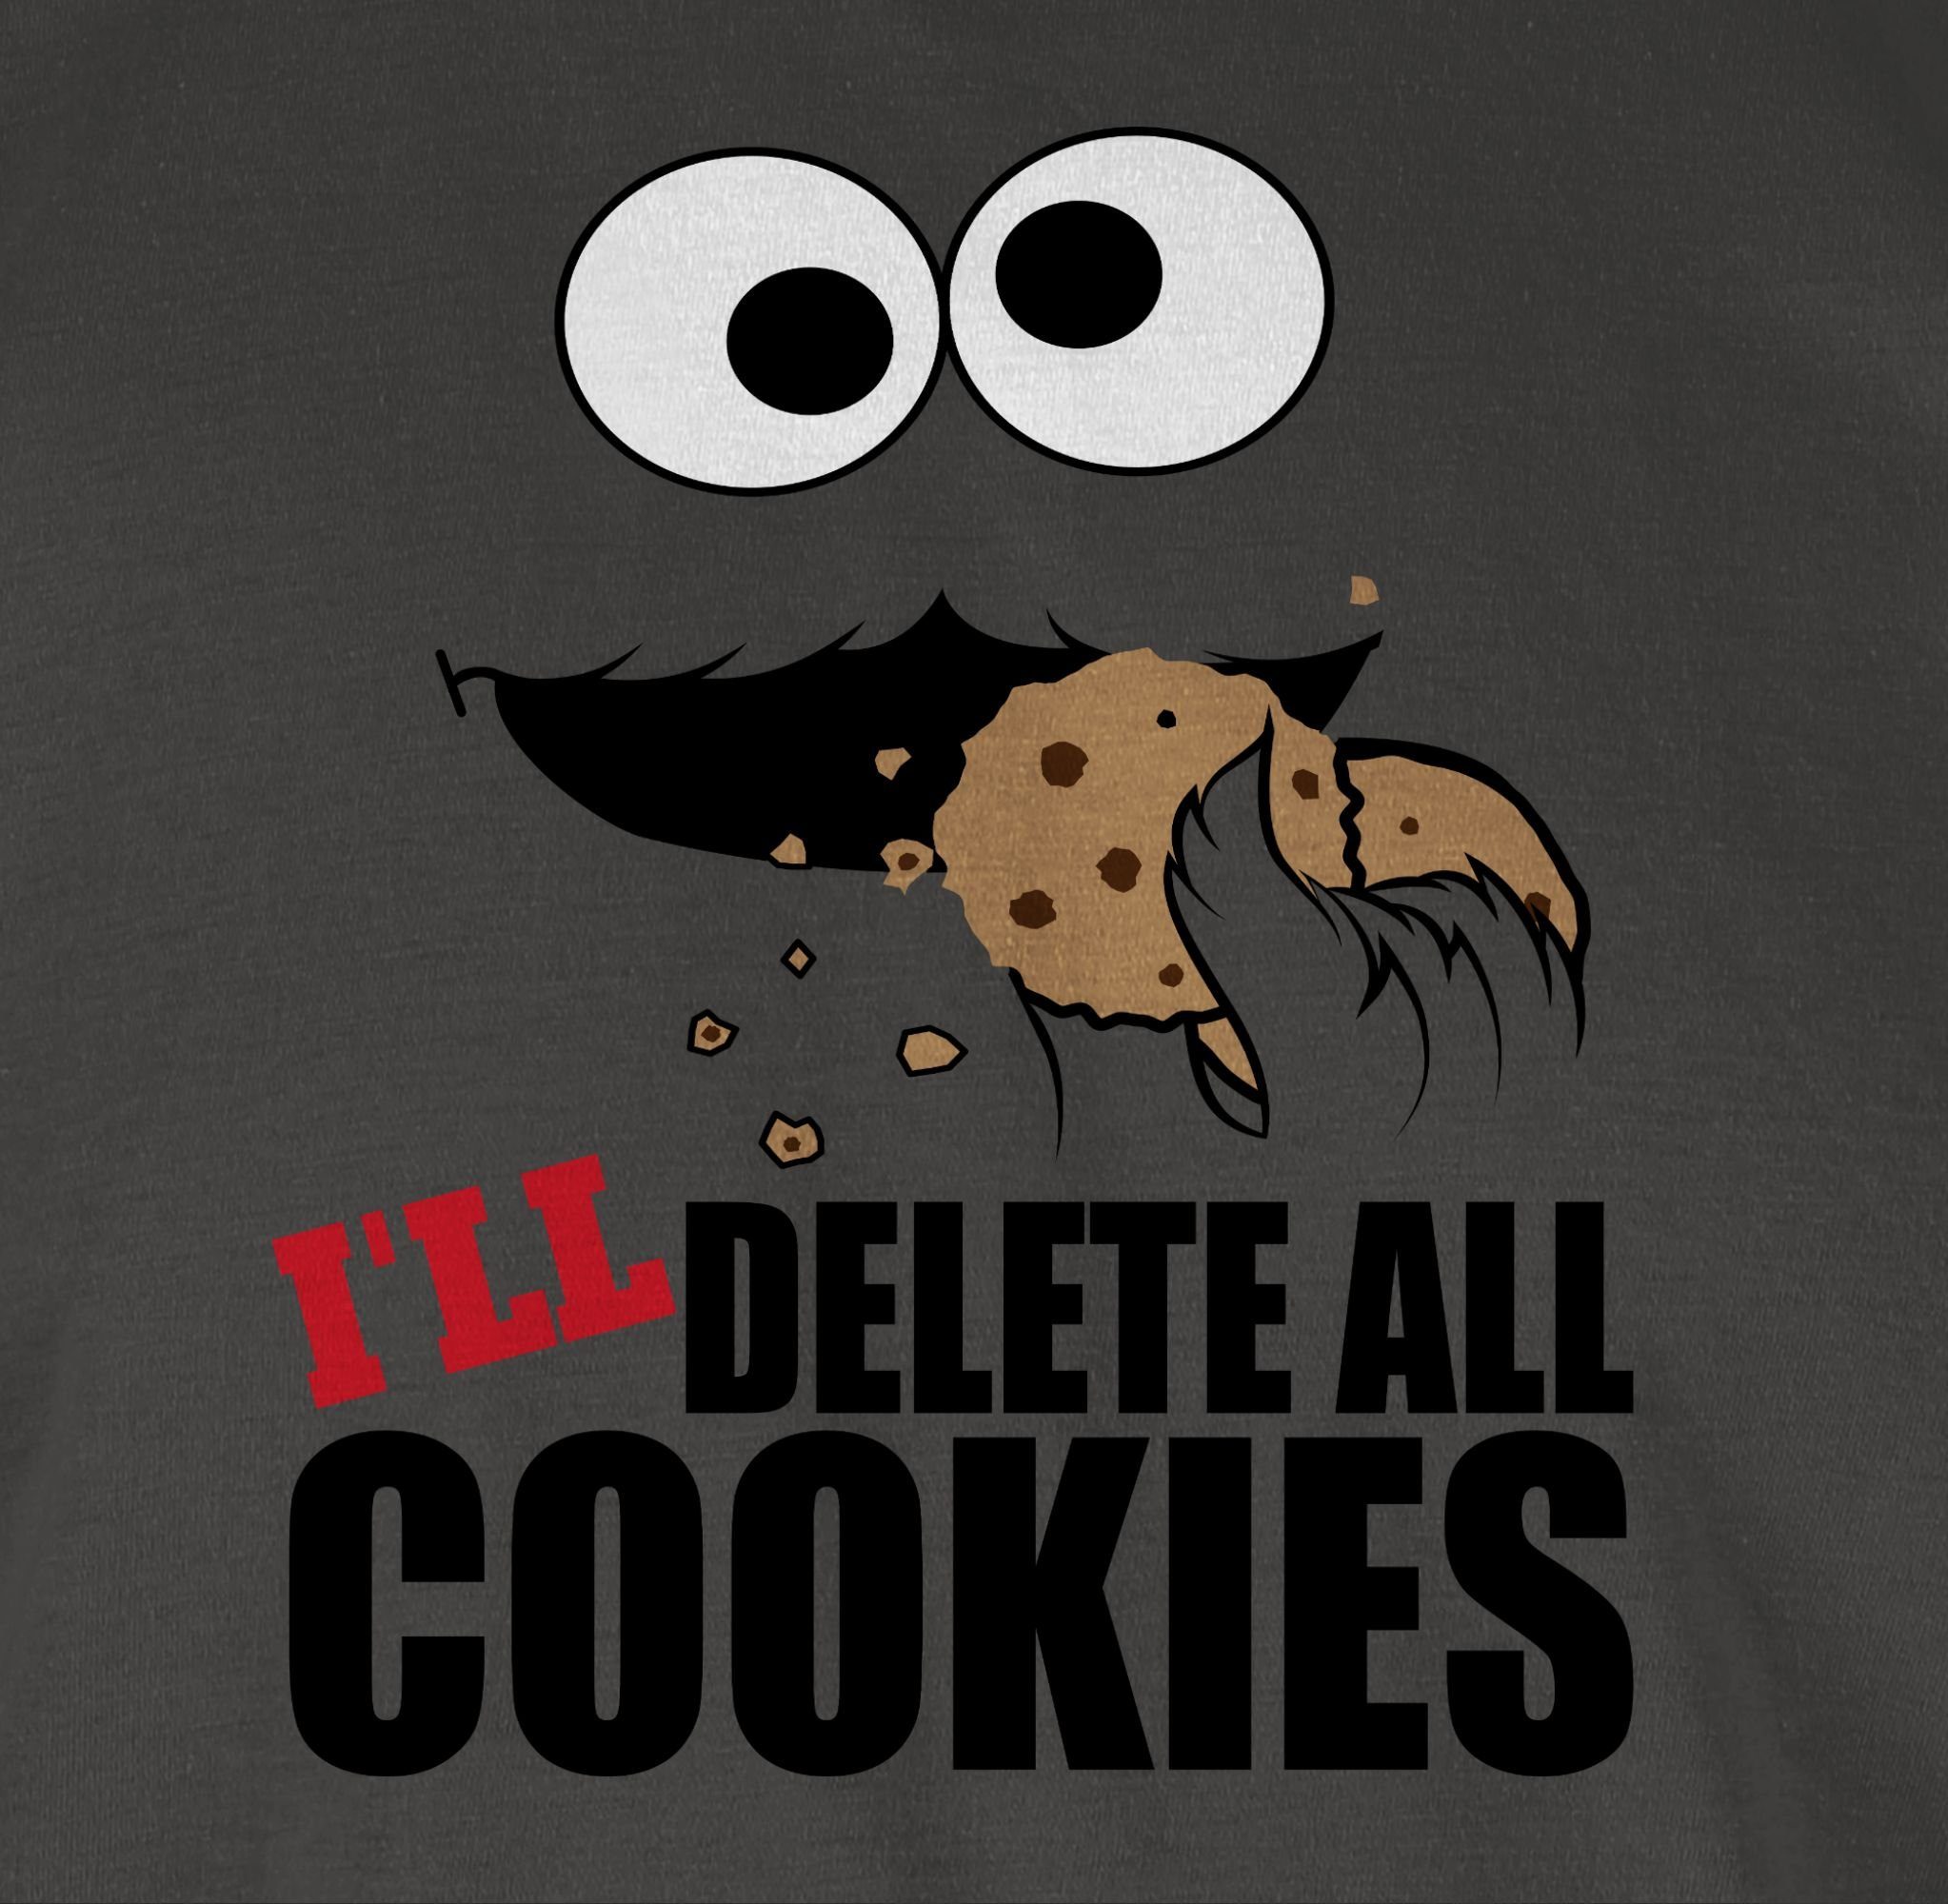 Shirtracer T-Shirt Geschenke 2 delete cookies Nerd I Keks-Monster all Dunkelgrau will